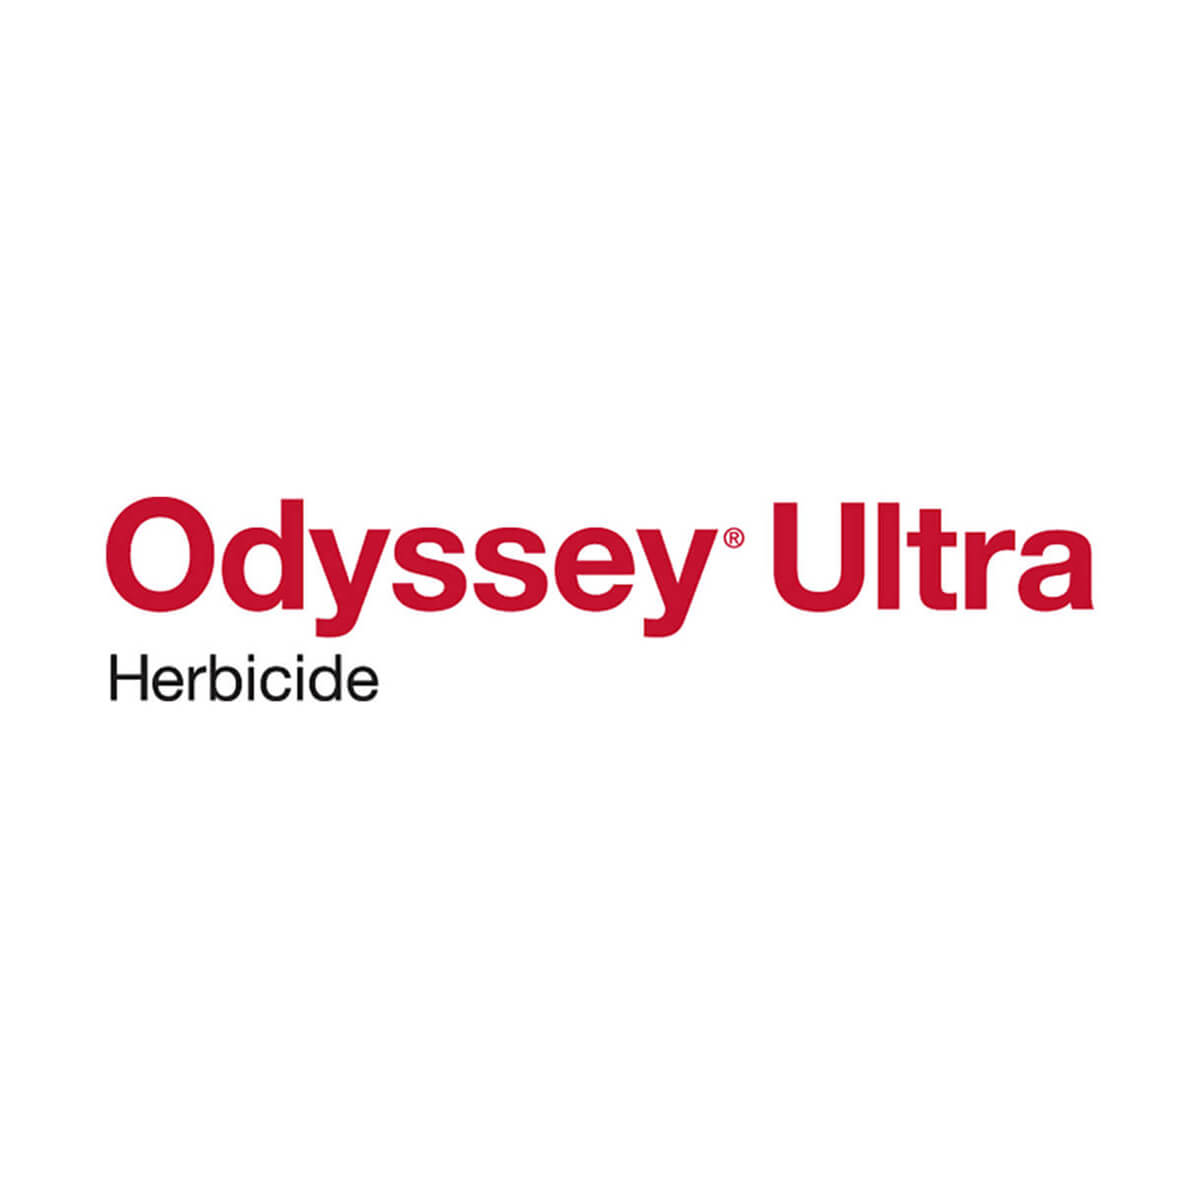 Odyssey Ultra Q 40AC Case